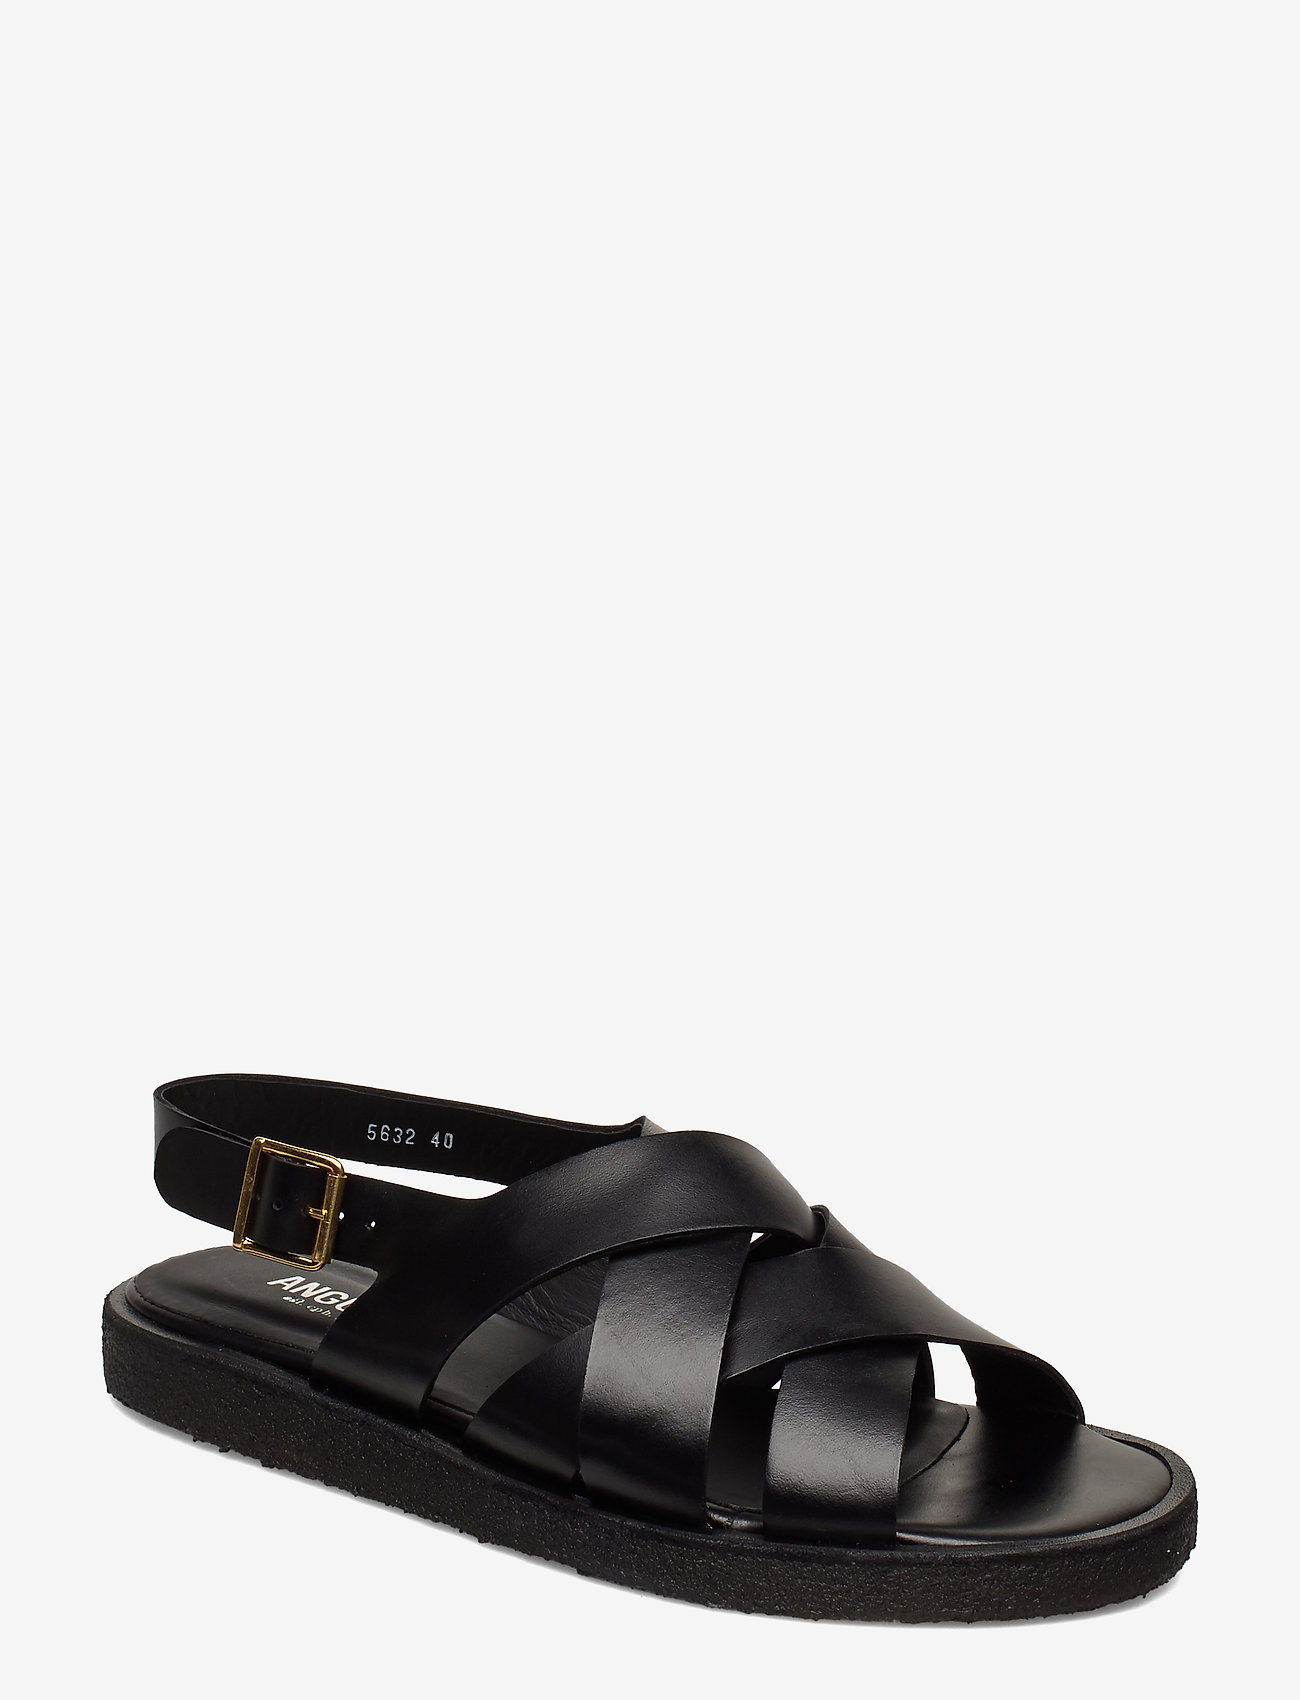 ANGULUS - Sandals - flat - open toe - op - flat sandals - 1835 black - 0